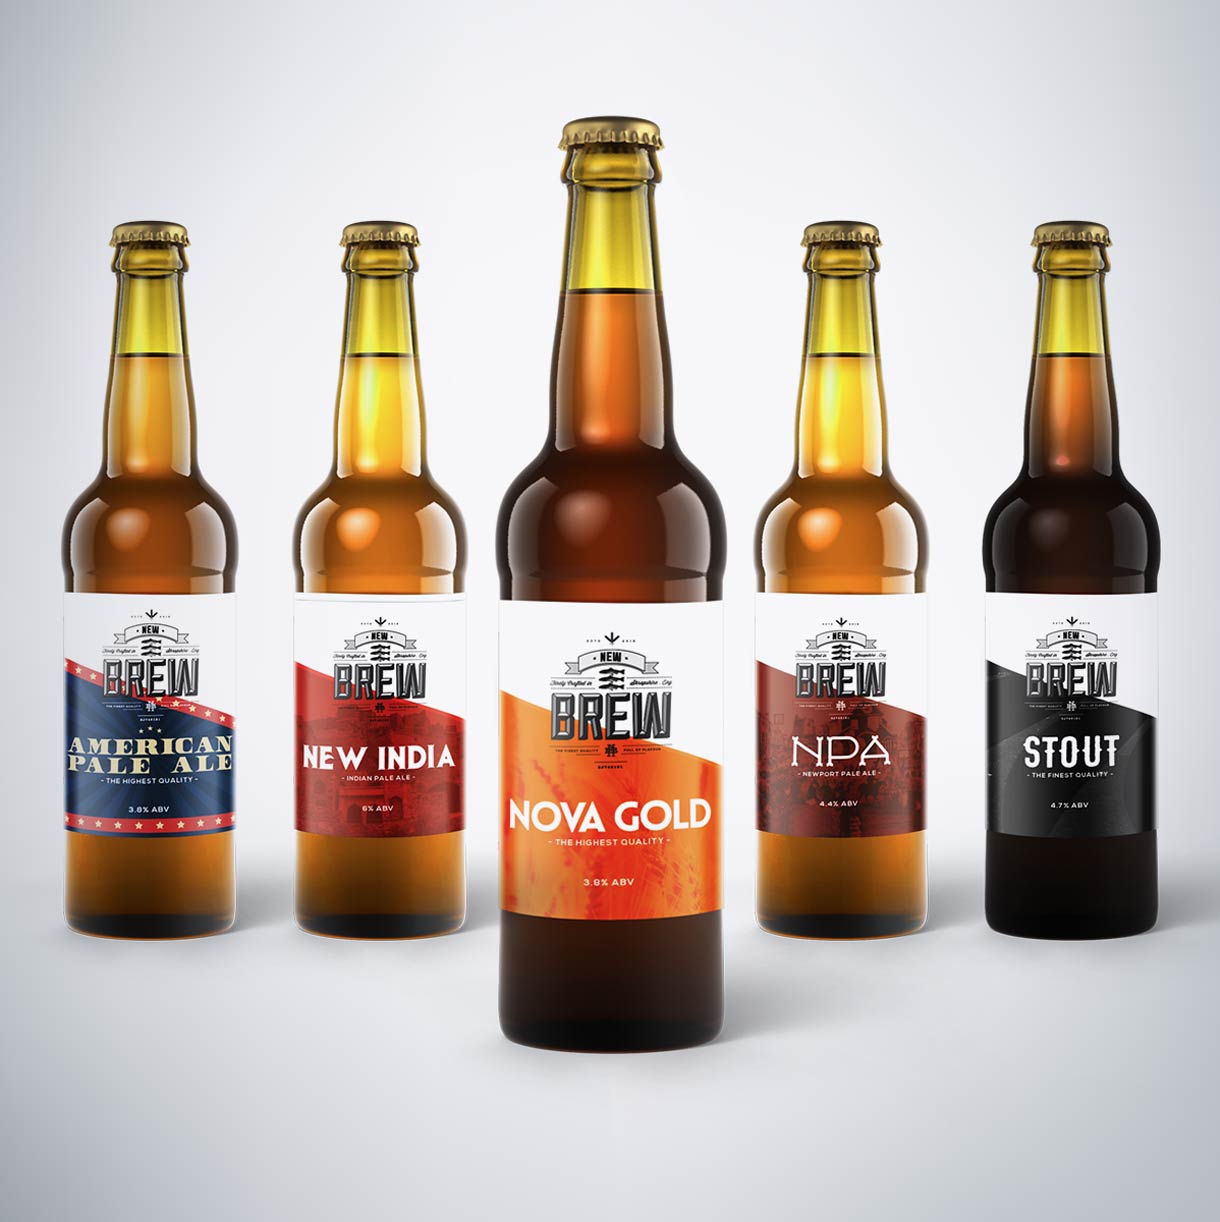 New Brew beer bottle images